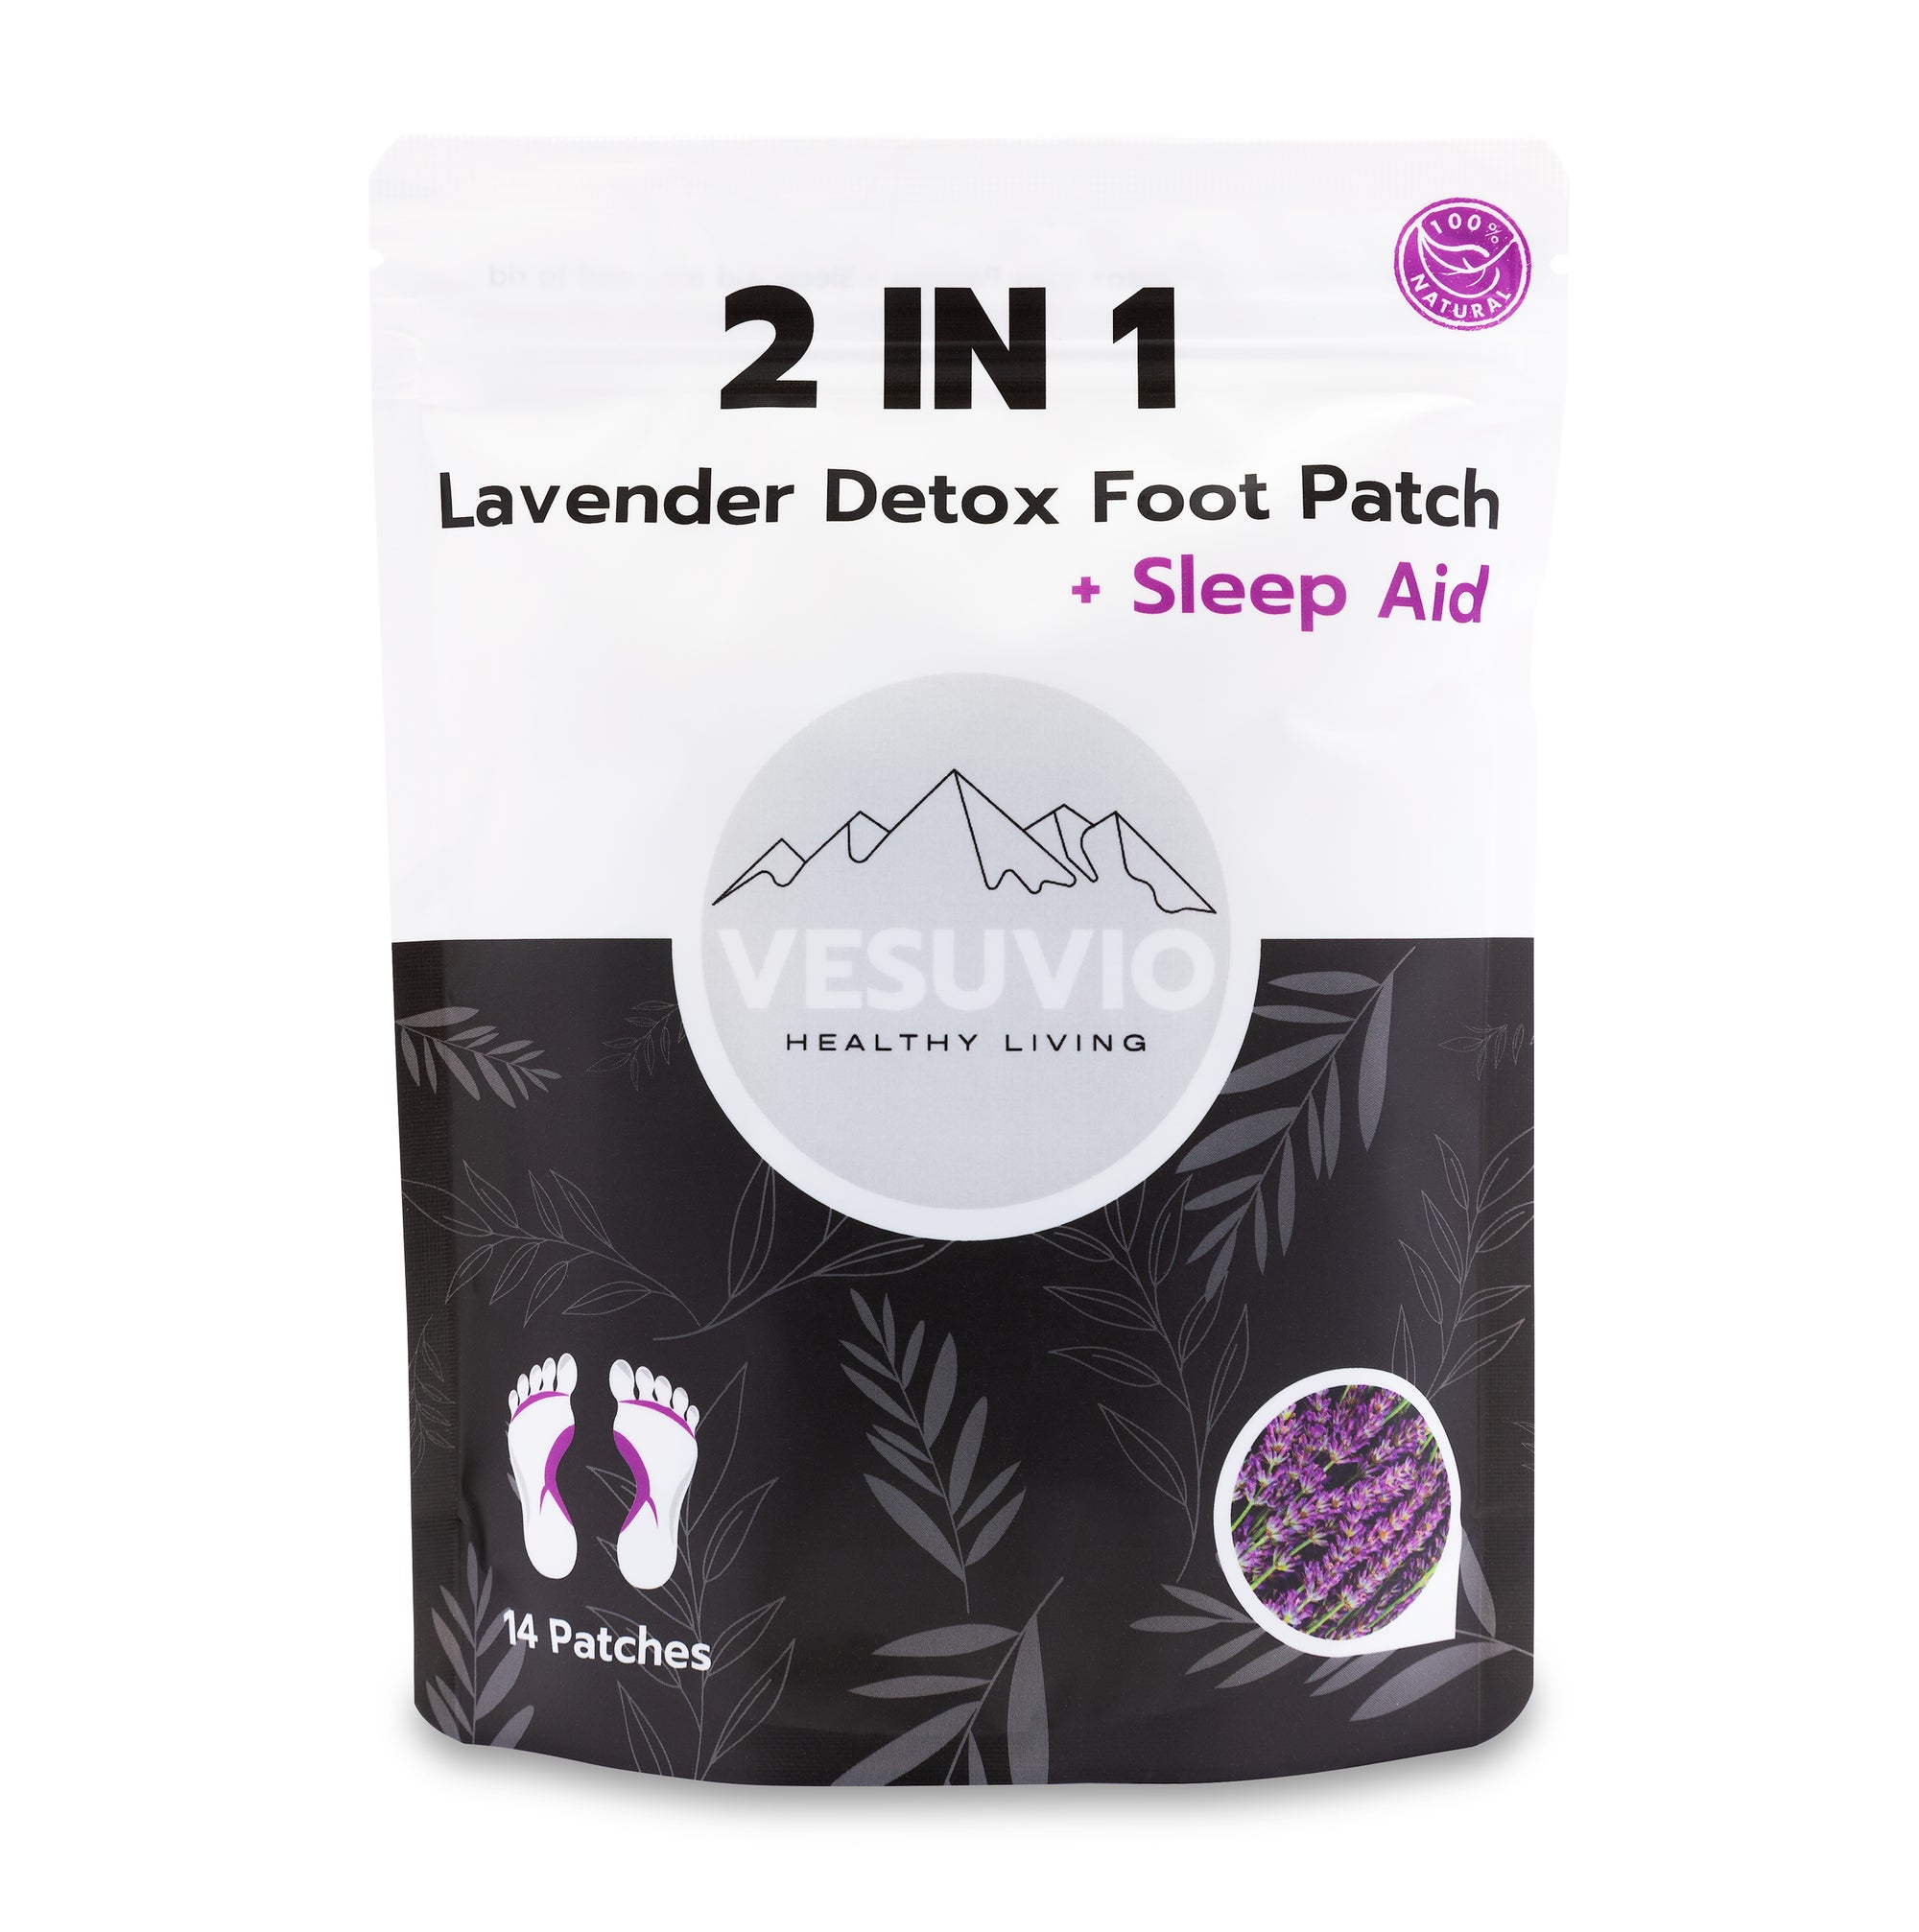 Lavender Detox Foot Patch + Sleep Aid